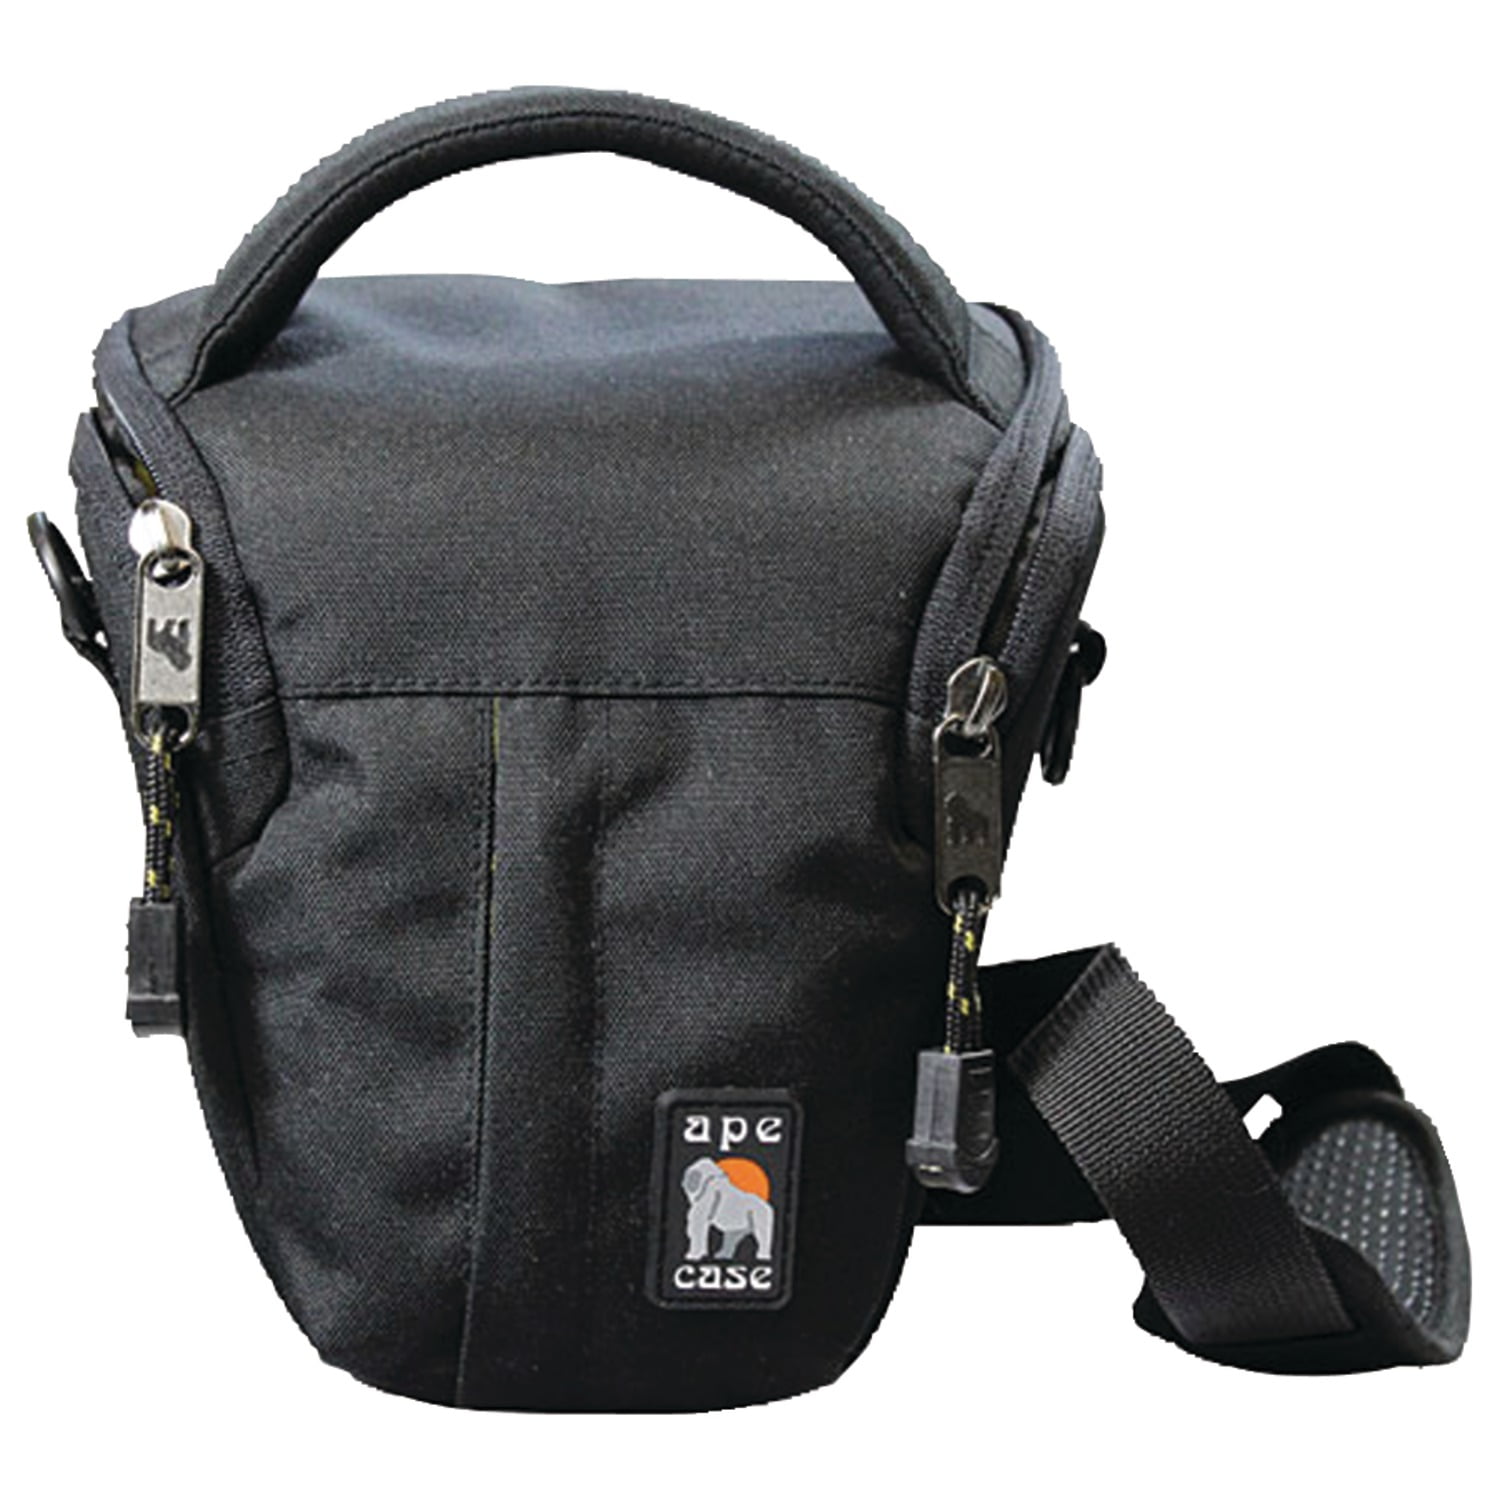 Ape Case ACPRO600 Compact DSLR Holster Camera Bag (Interior Dim: 4"L x